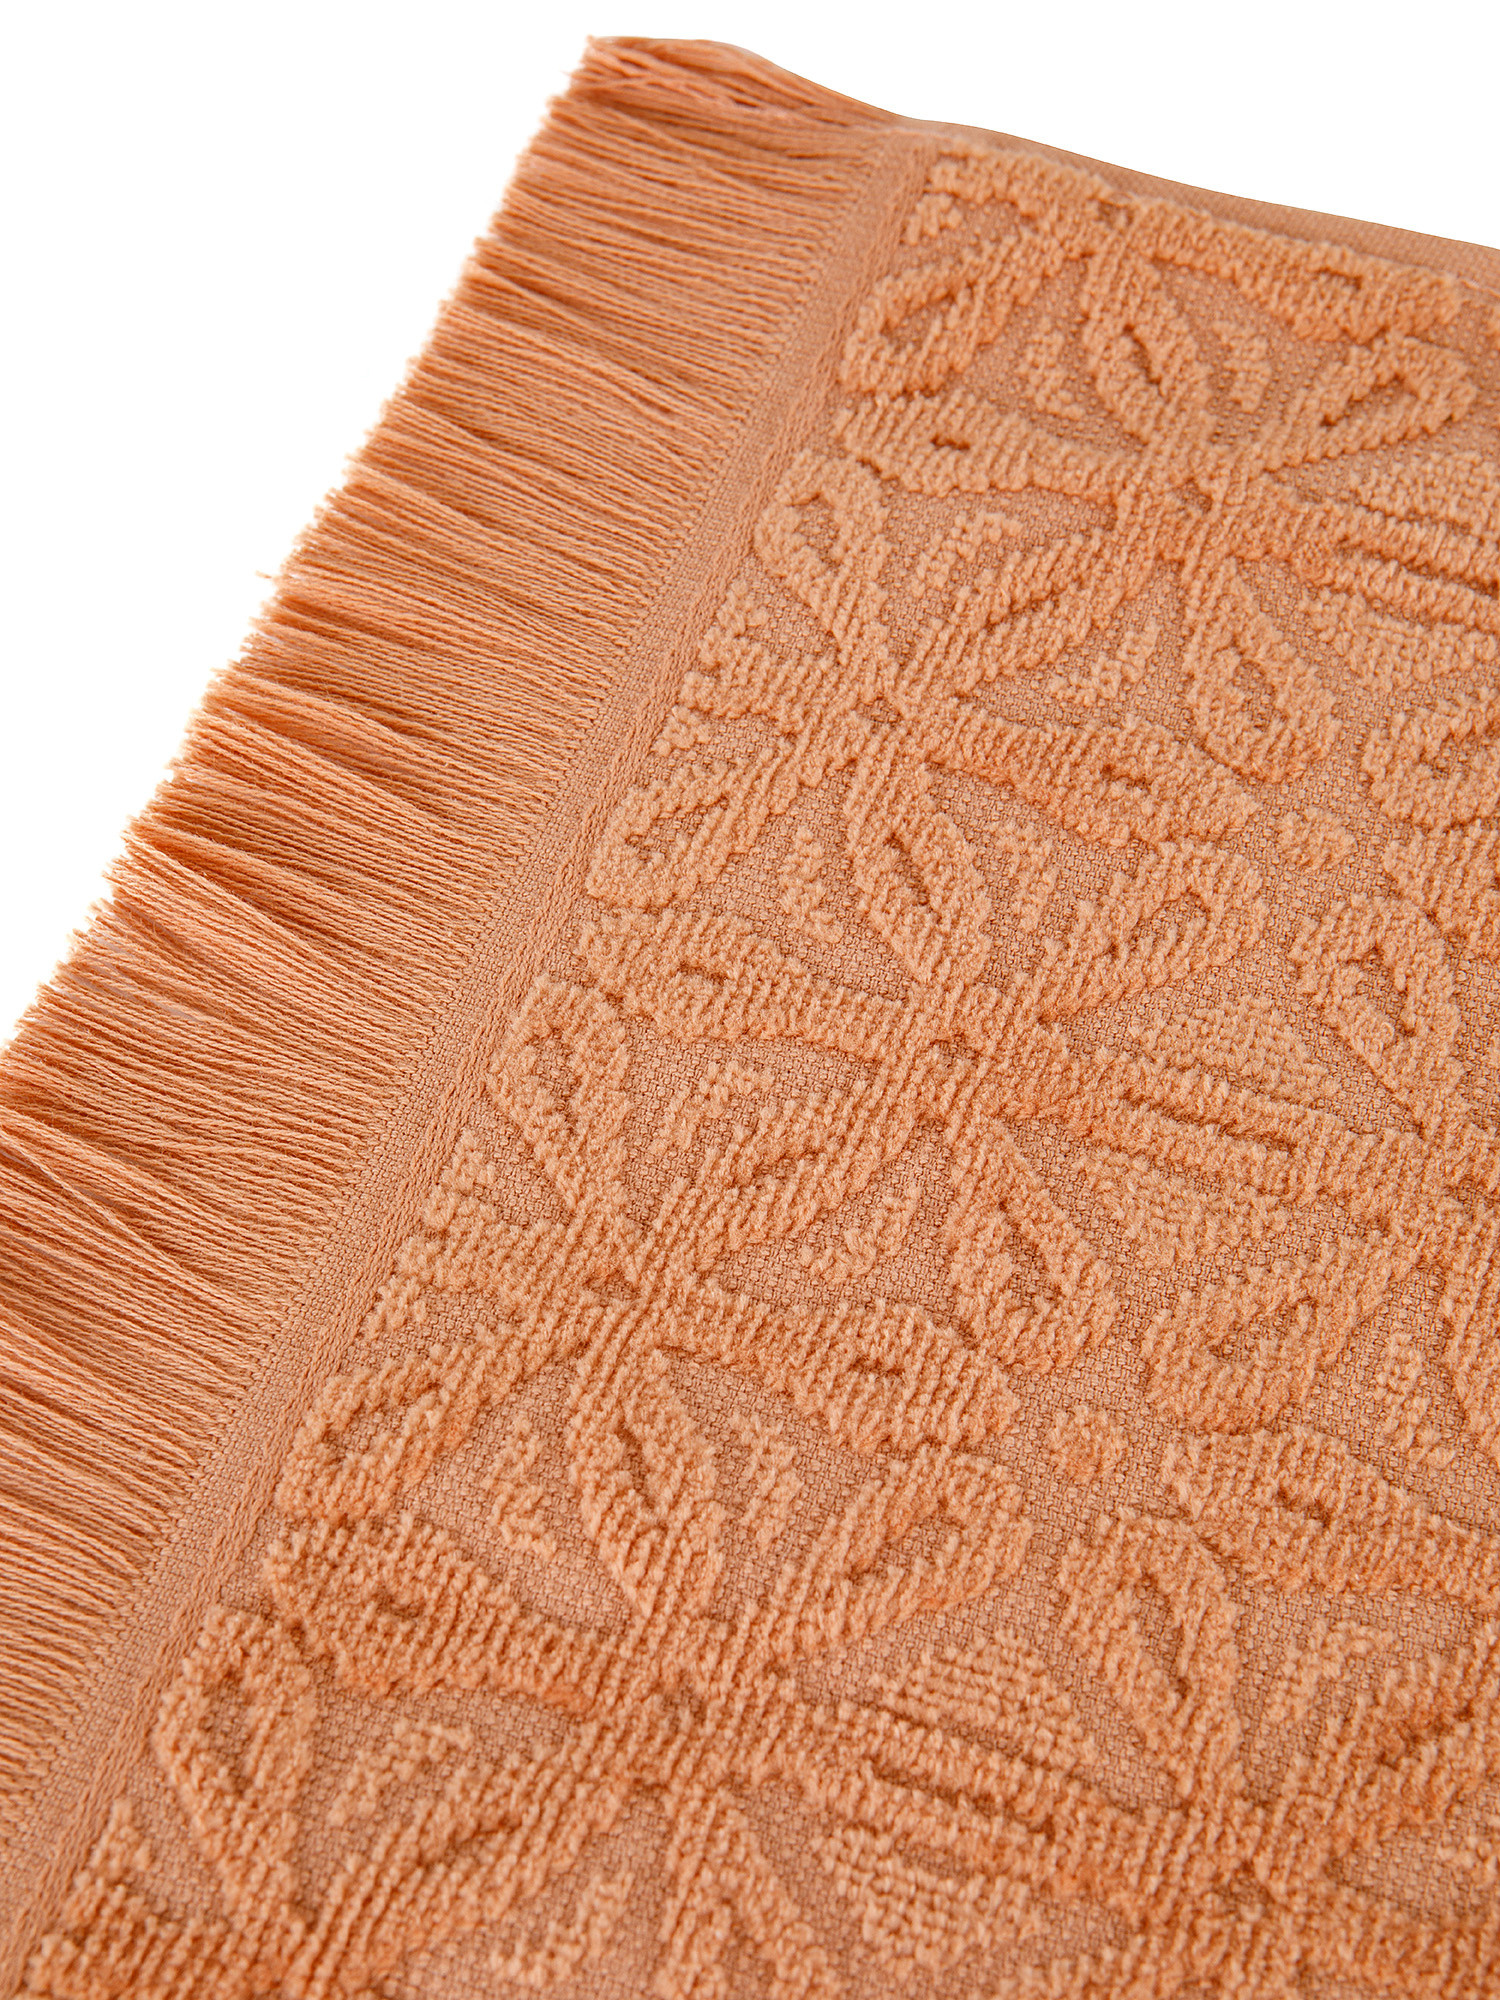 Asciugamano cotone velour motivo geometrico, Marrone, large